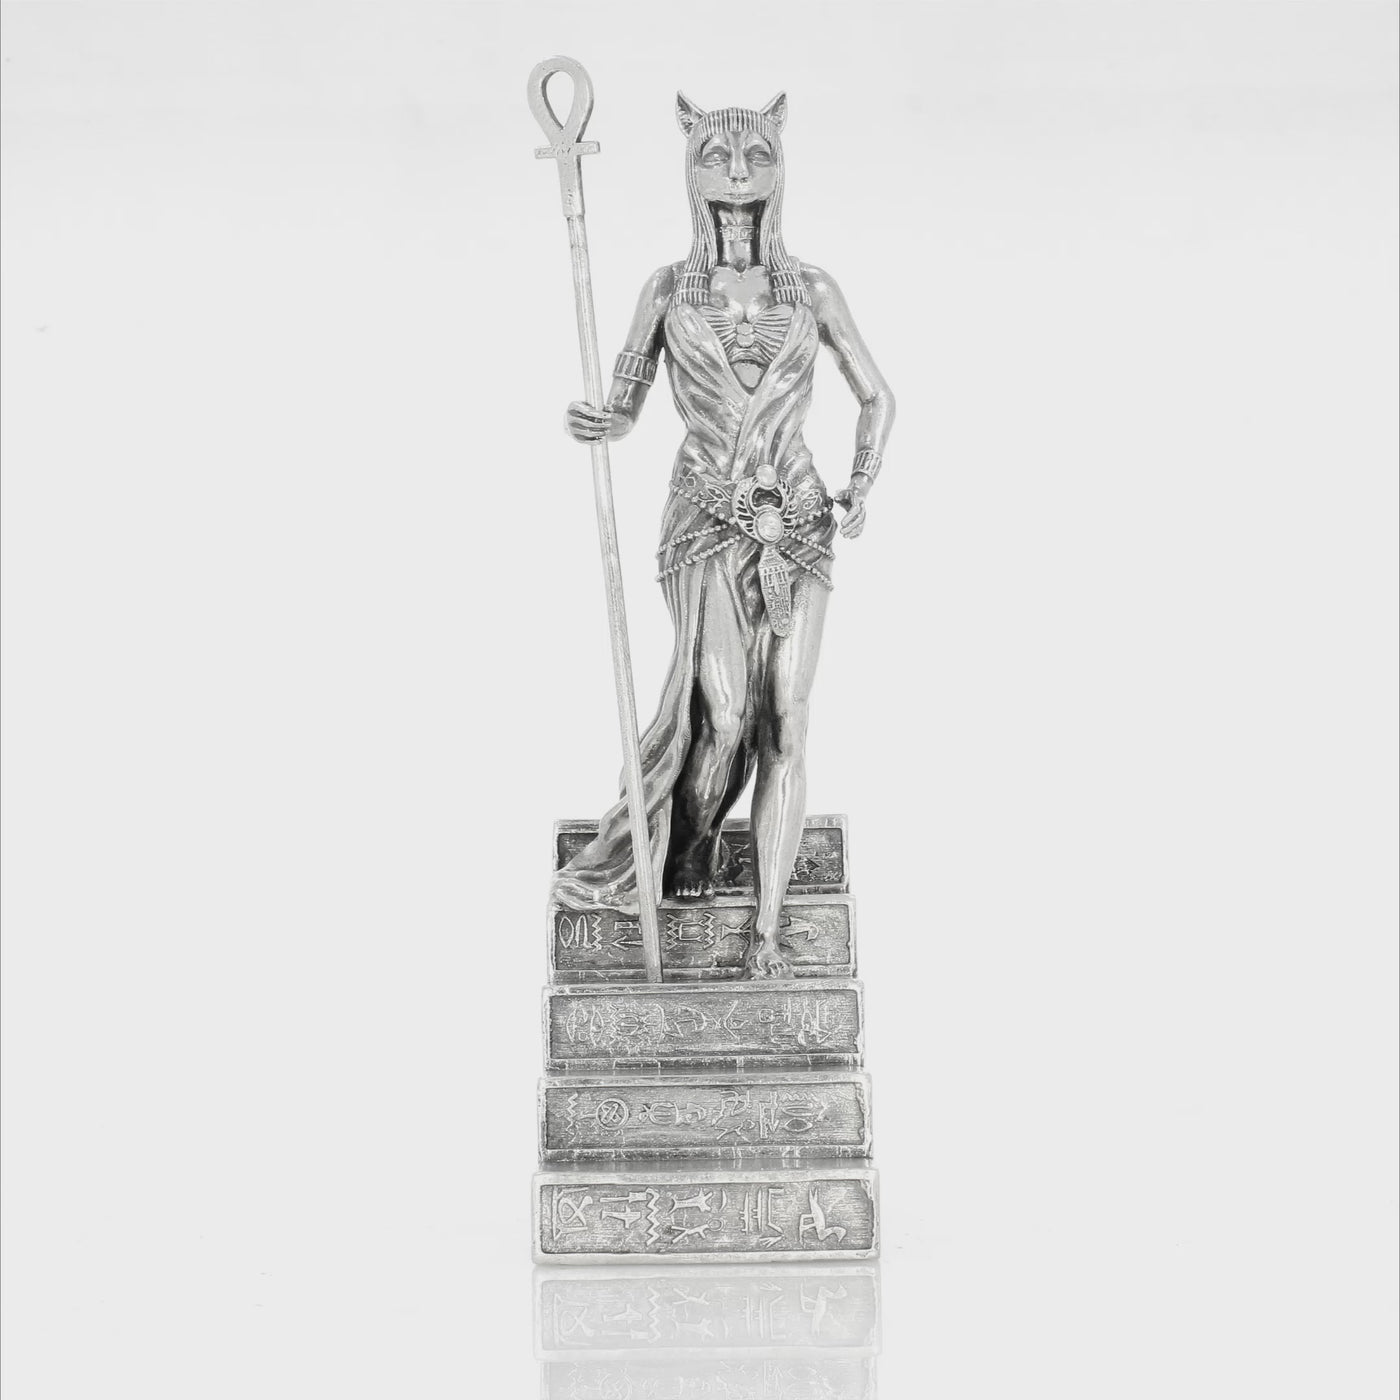 Bastet: Goddess of Protection